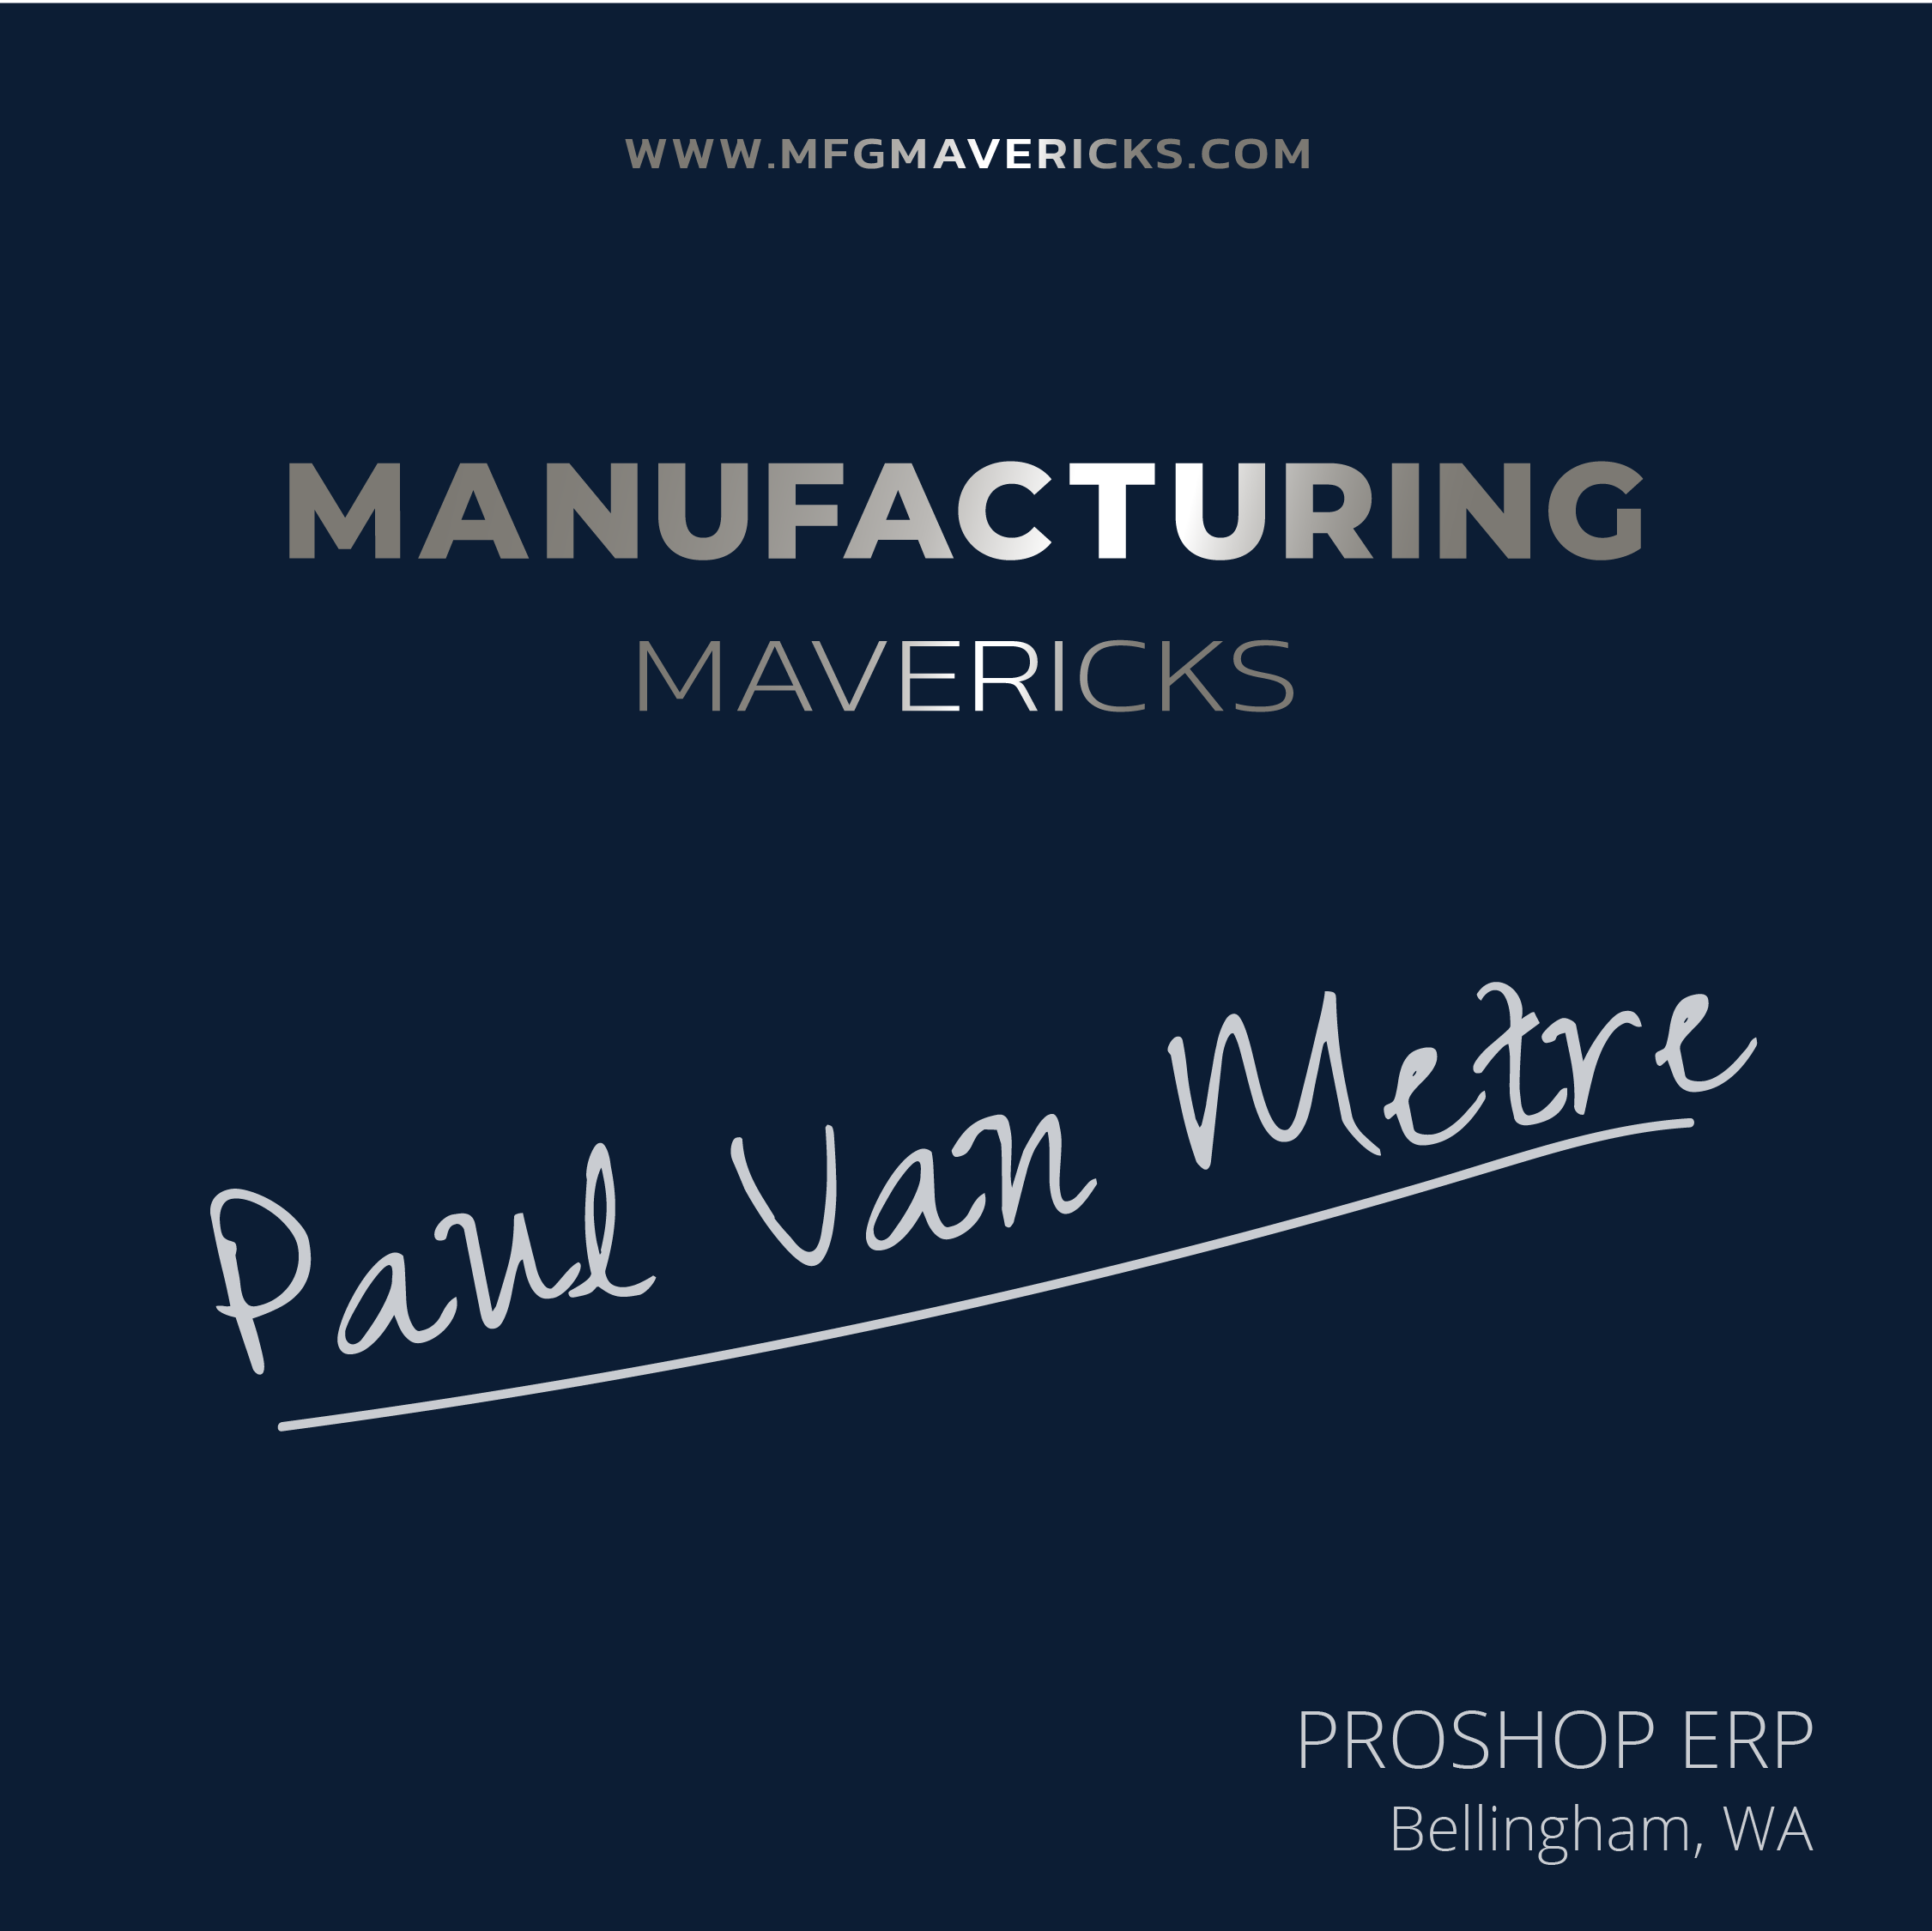 Episode 7 of Manufacturing Mavericks